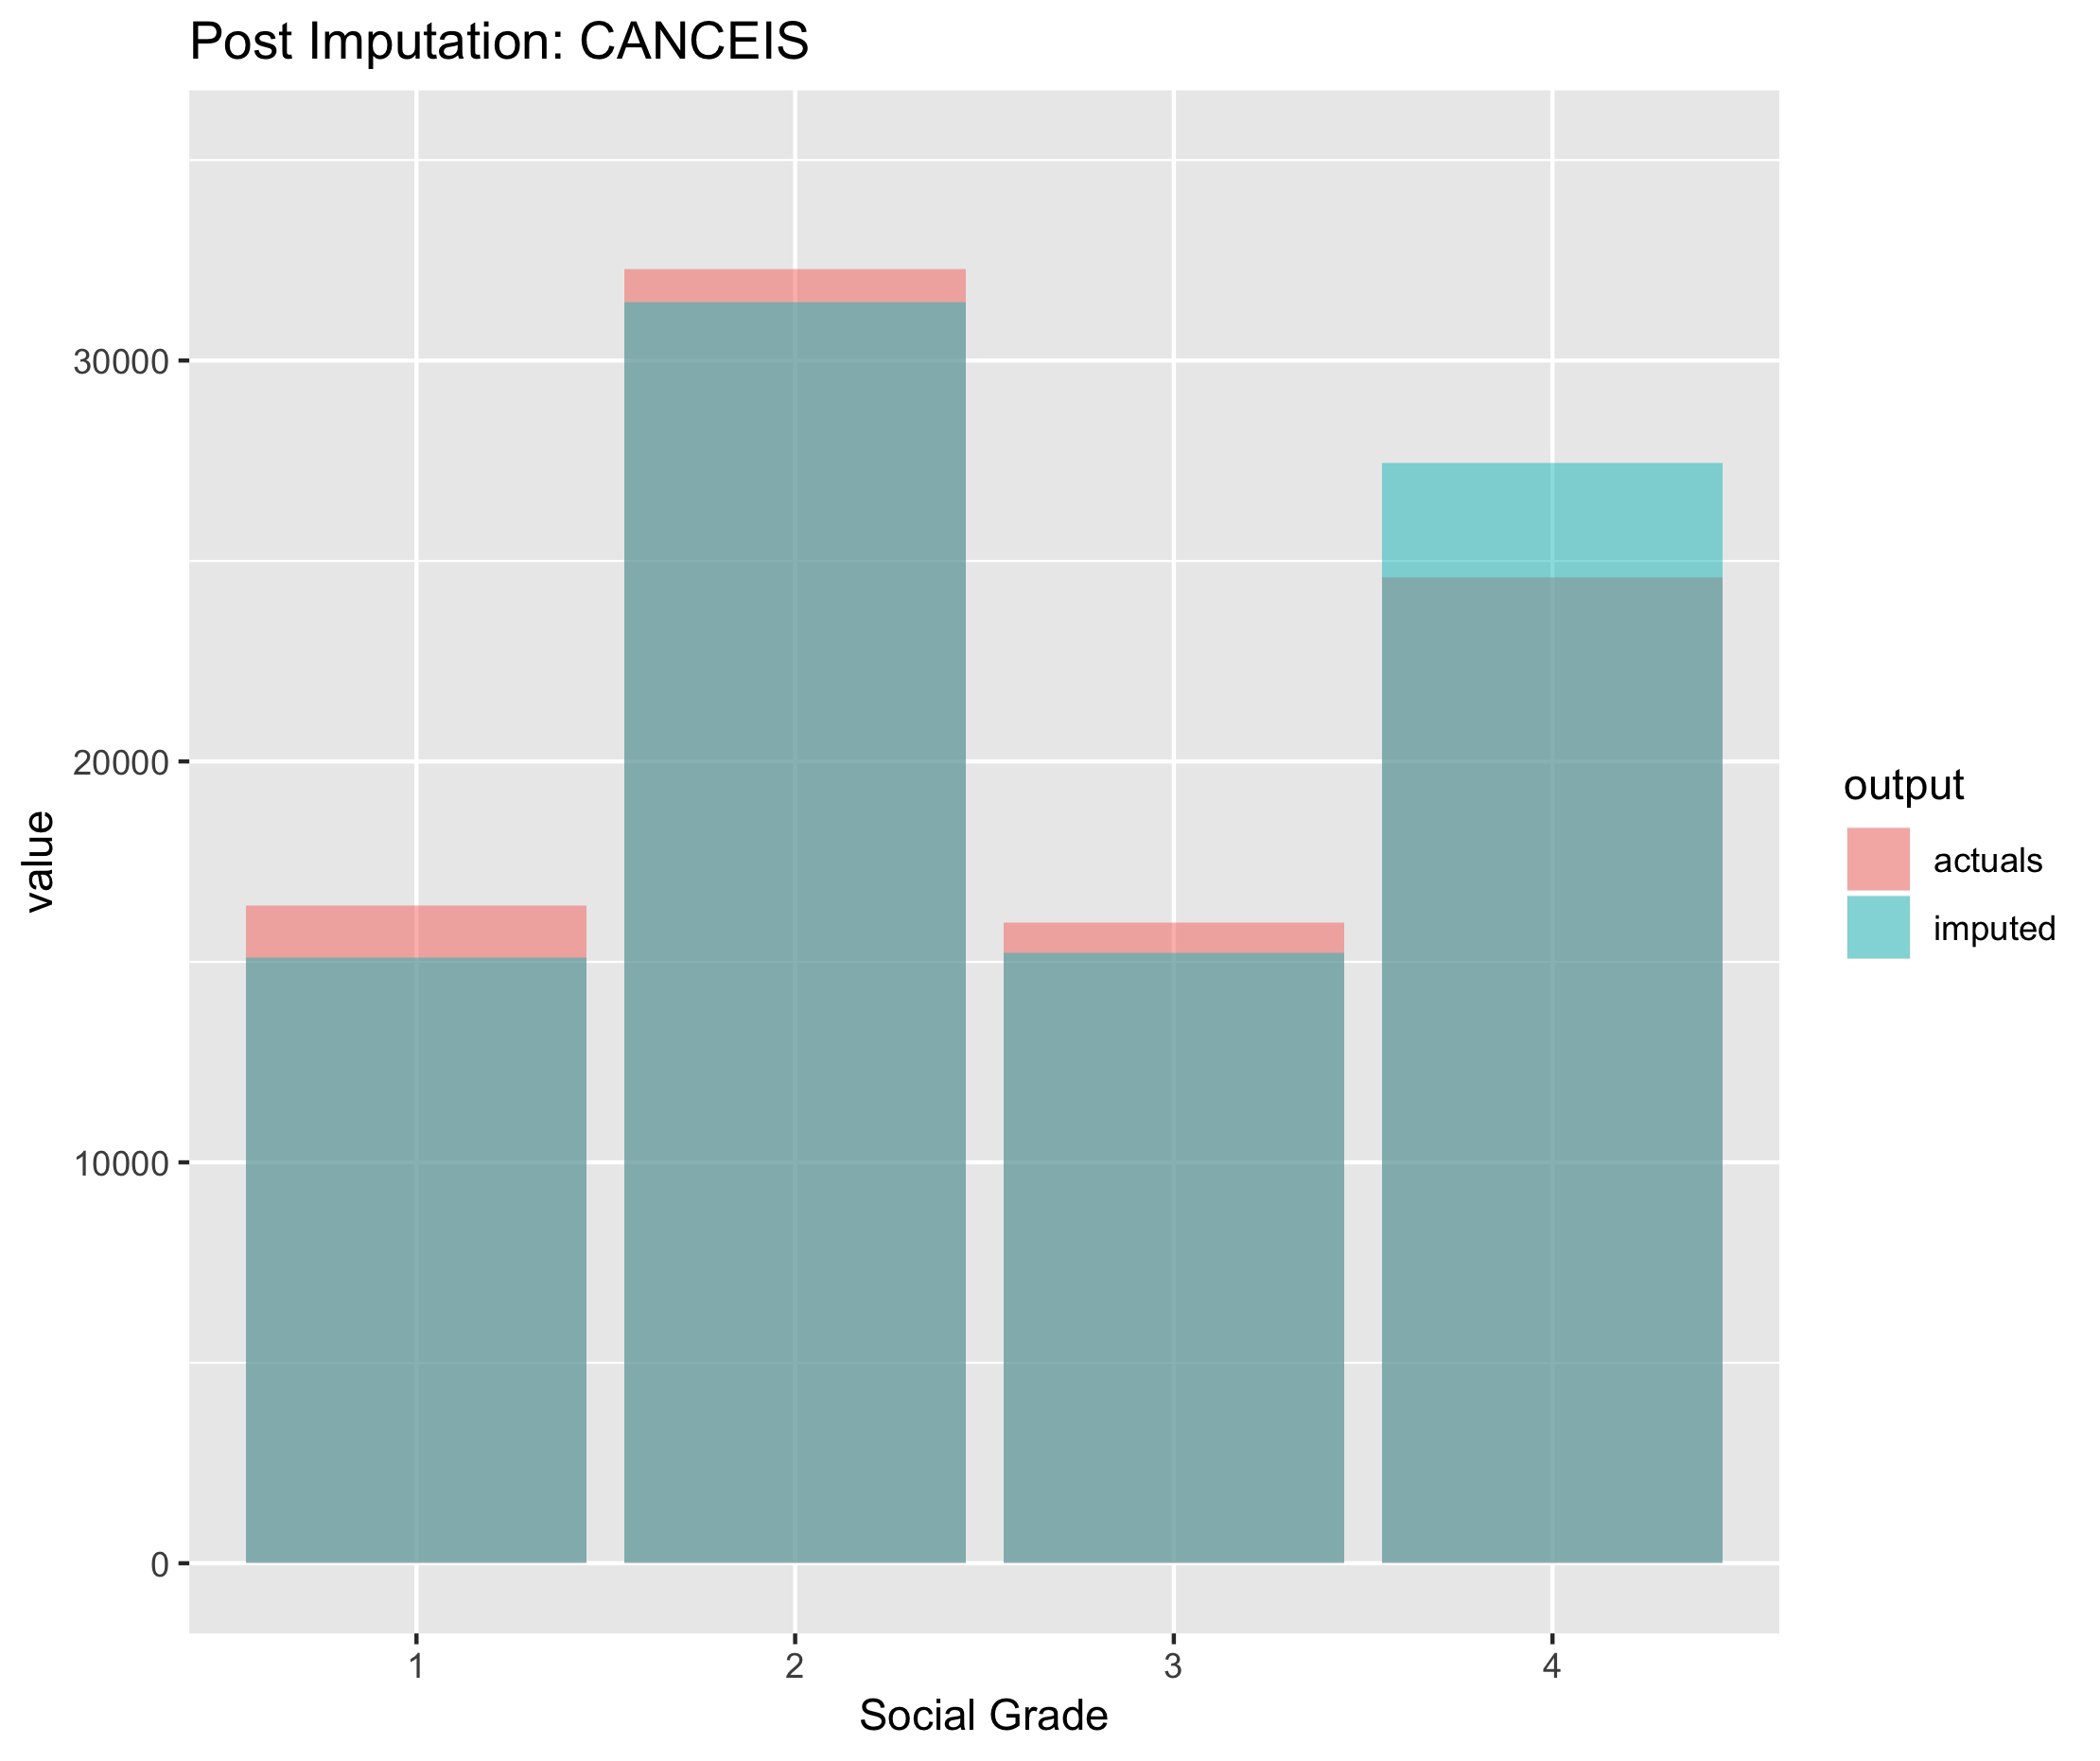 Figure 6.17. Post imputation distribution of economic activity using CANCEIS imputation